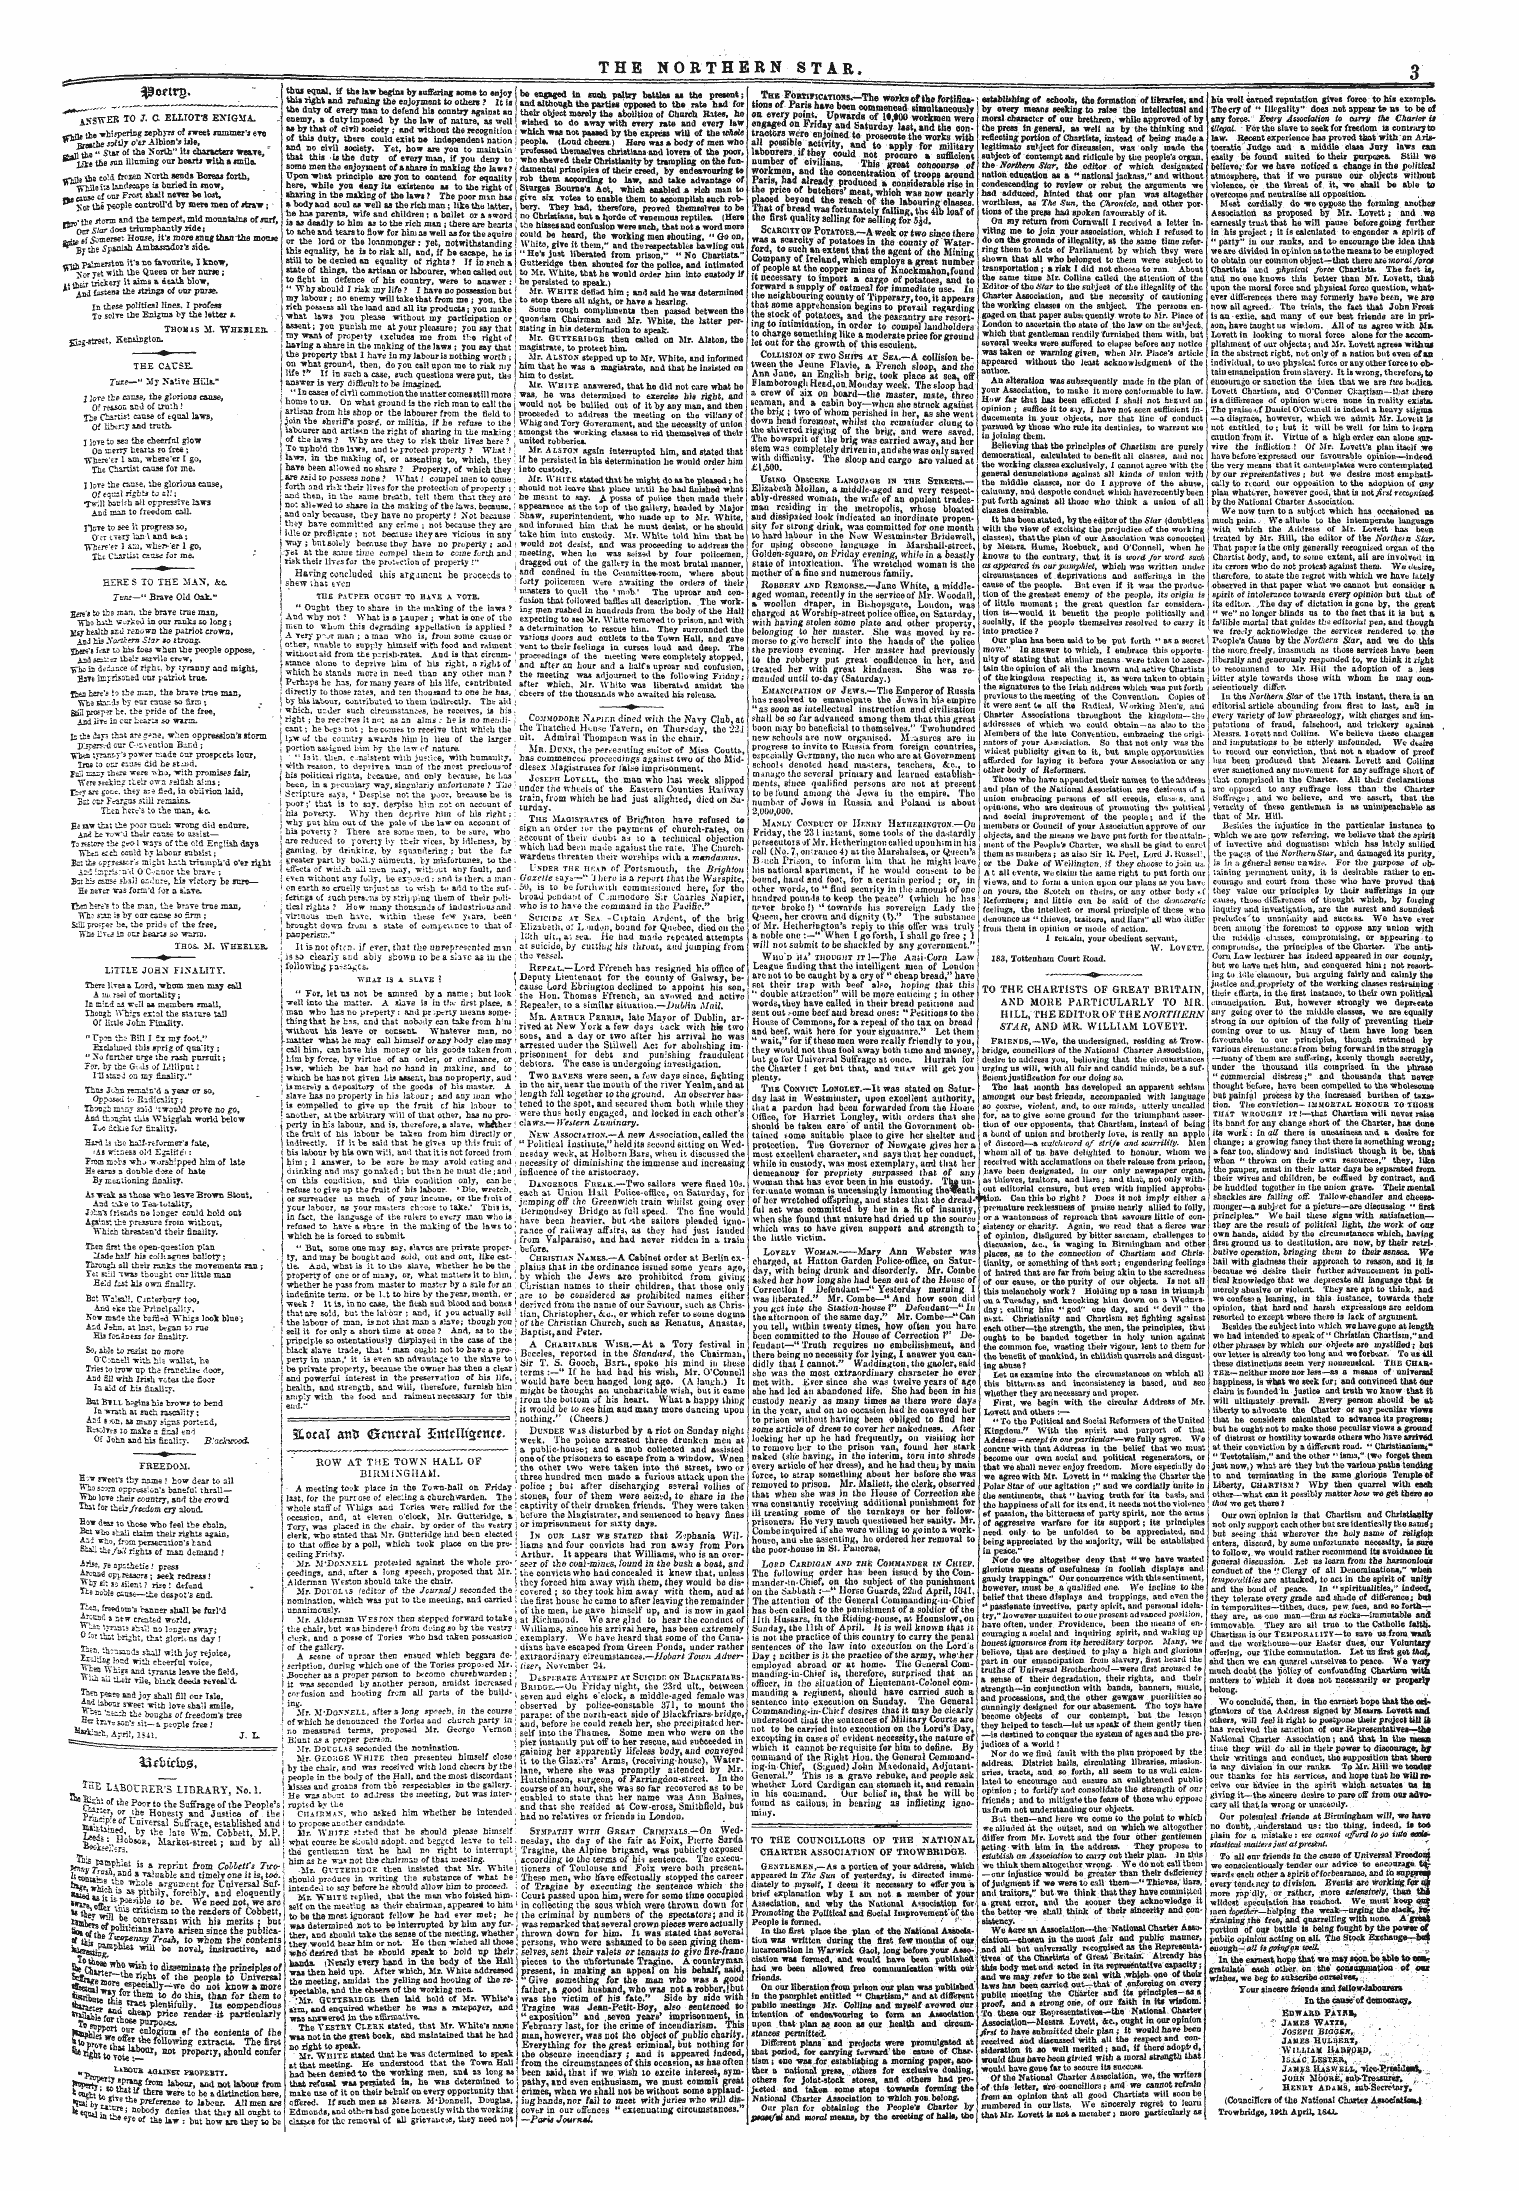 Northern Star (1837-1852): jS F Y, 3rd edition - 3a*Biri»S